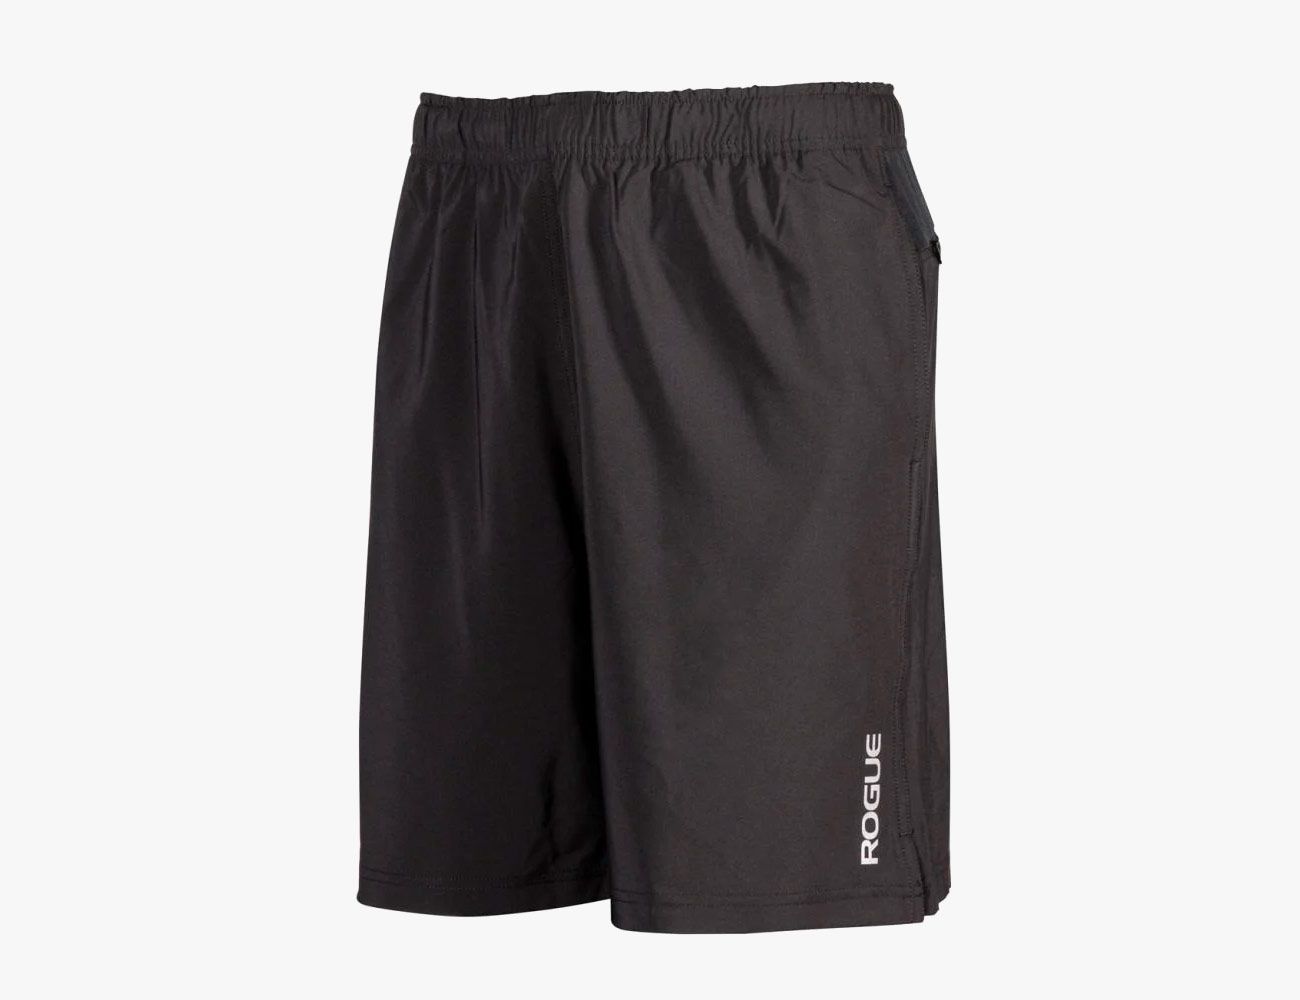 adidas training shorts with zip pockets